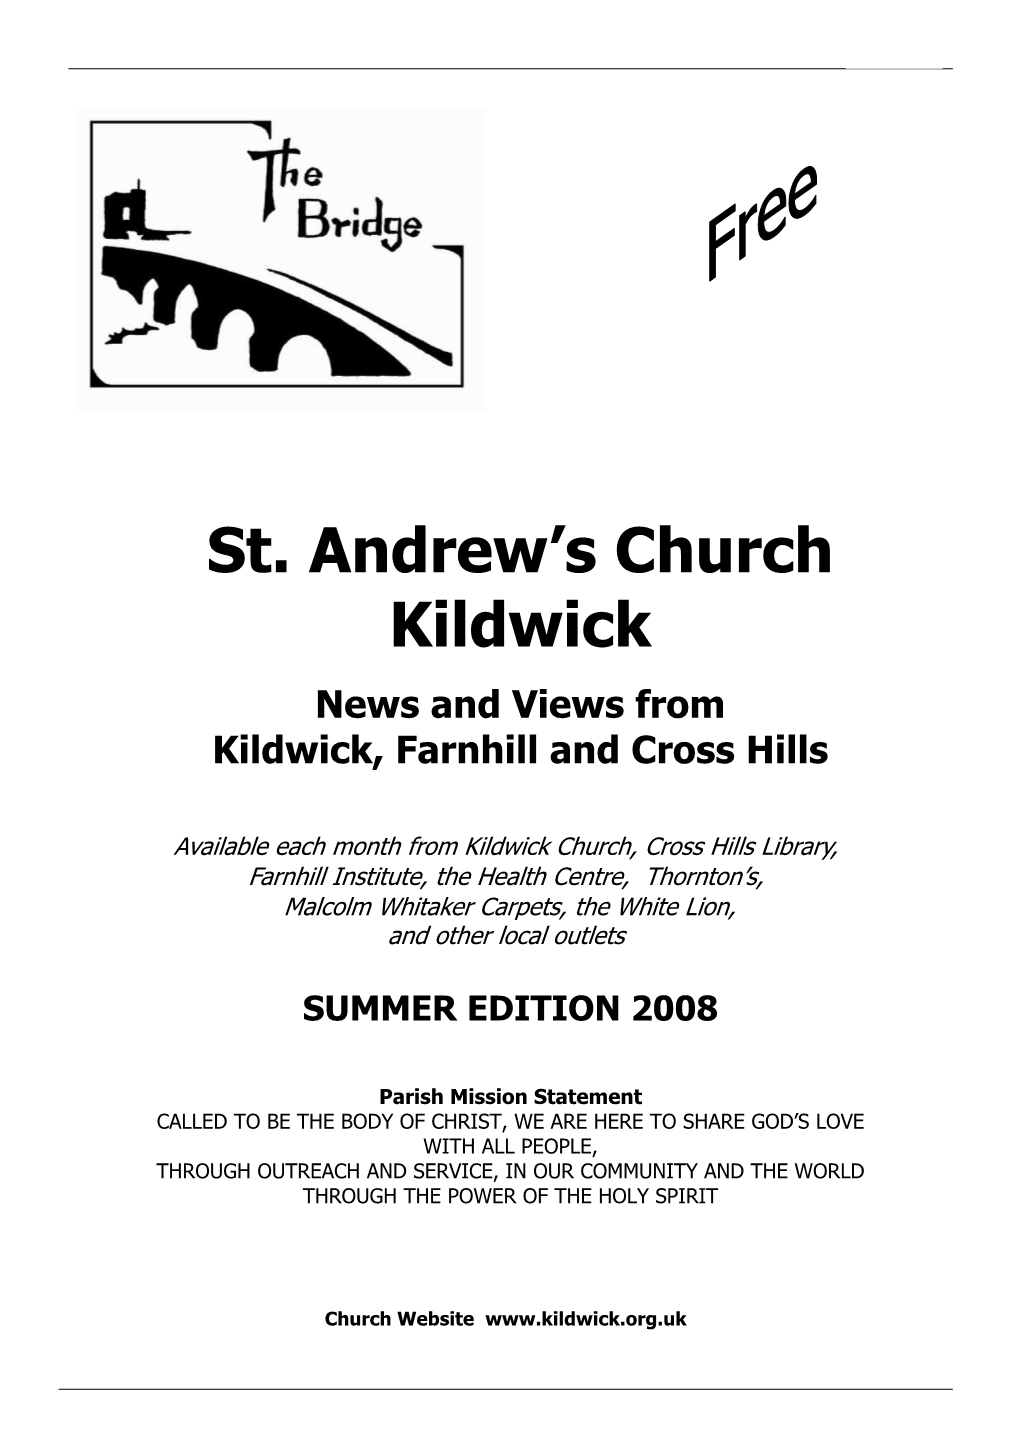 St. Andrew's Church Kildwick